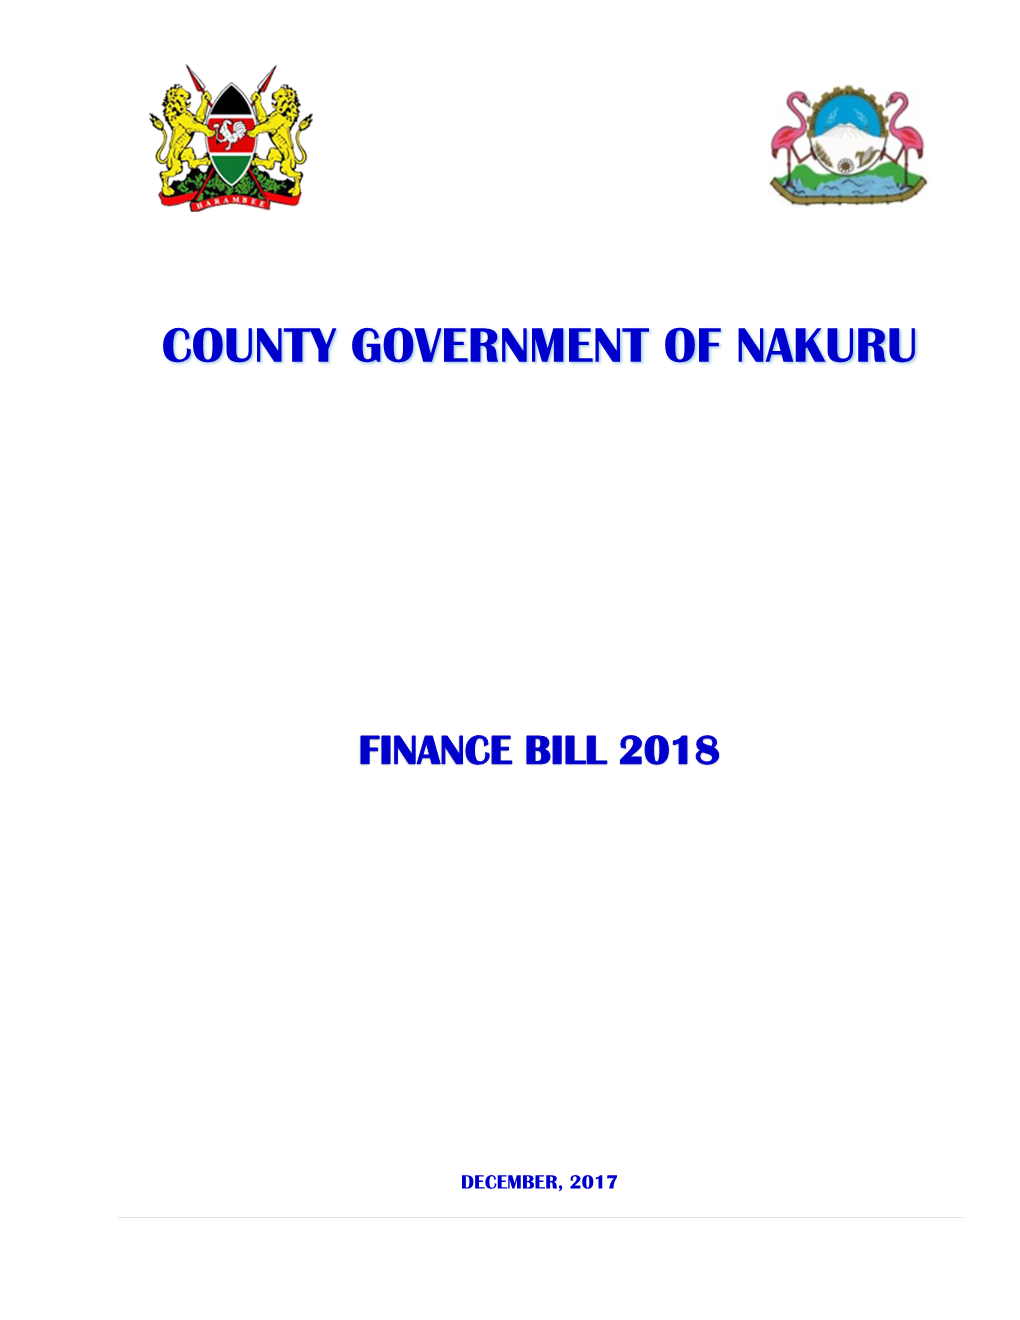 County Government of Nakuru